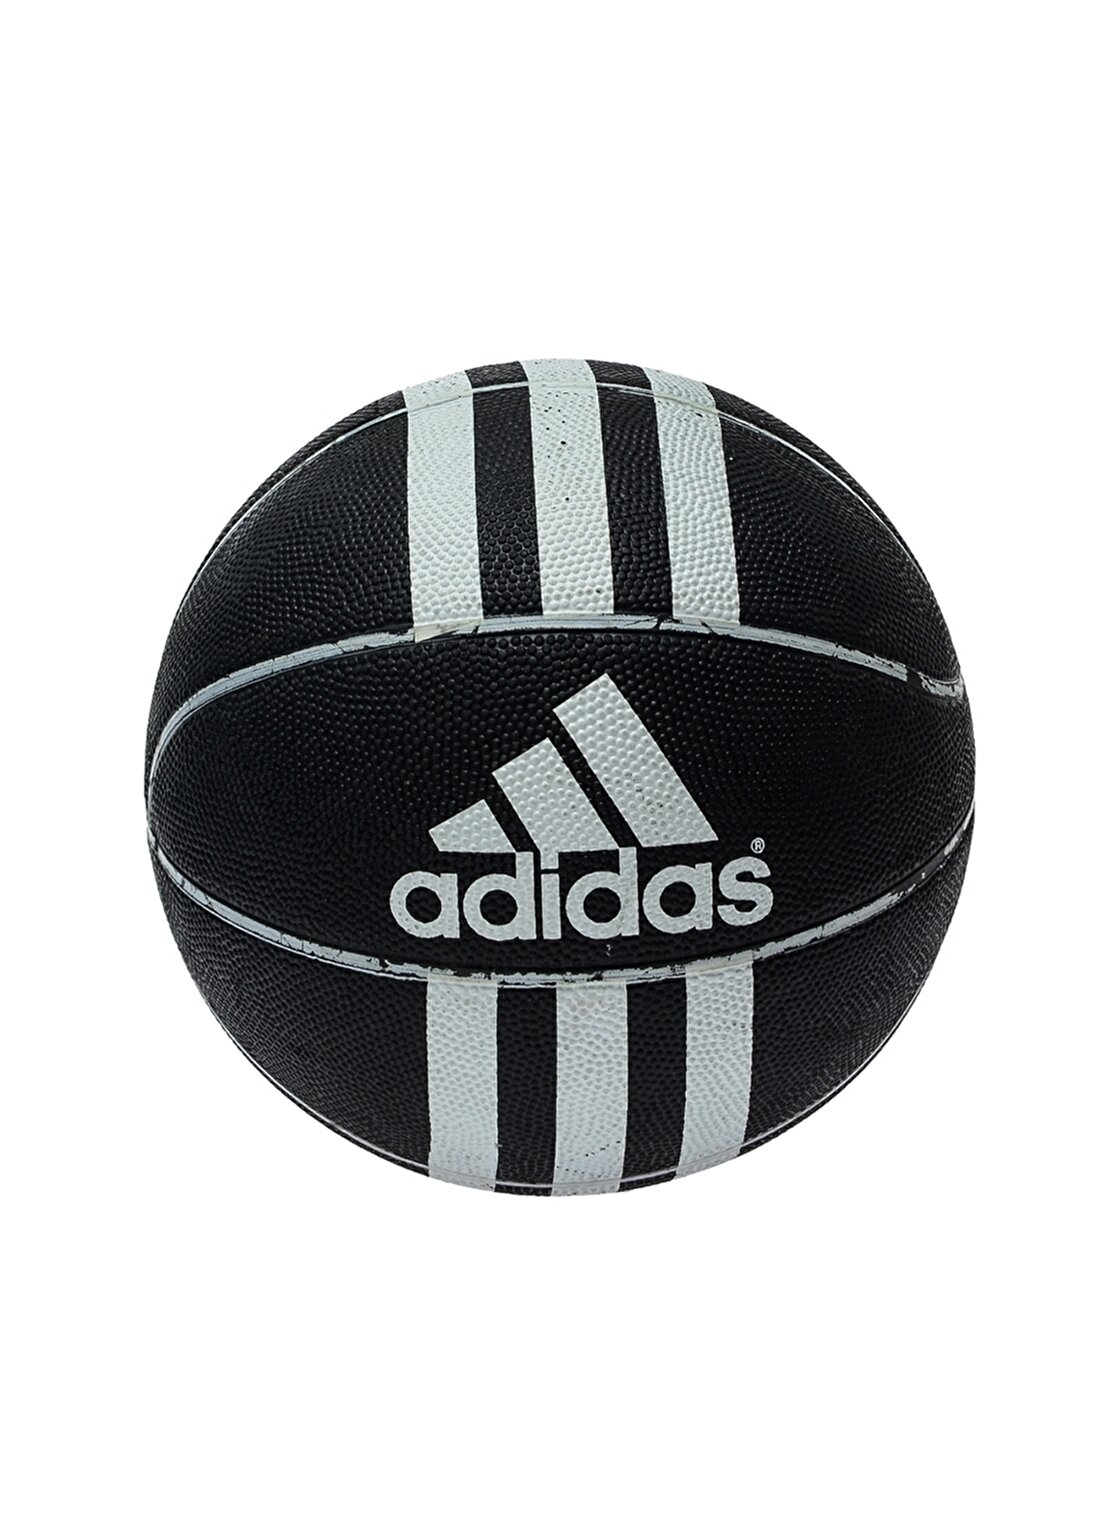 Adidas 279008 3S Rubber X Basketbol Topu